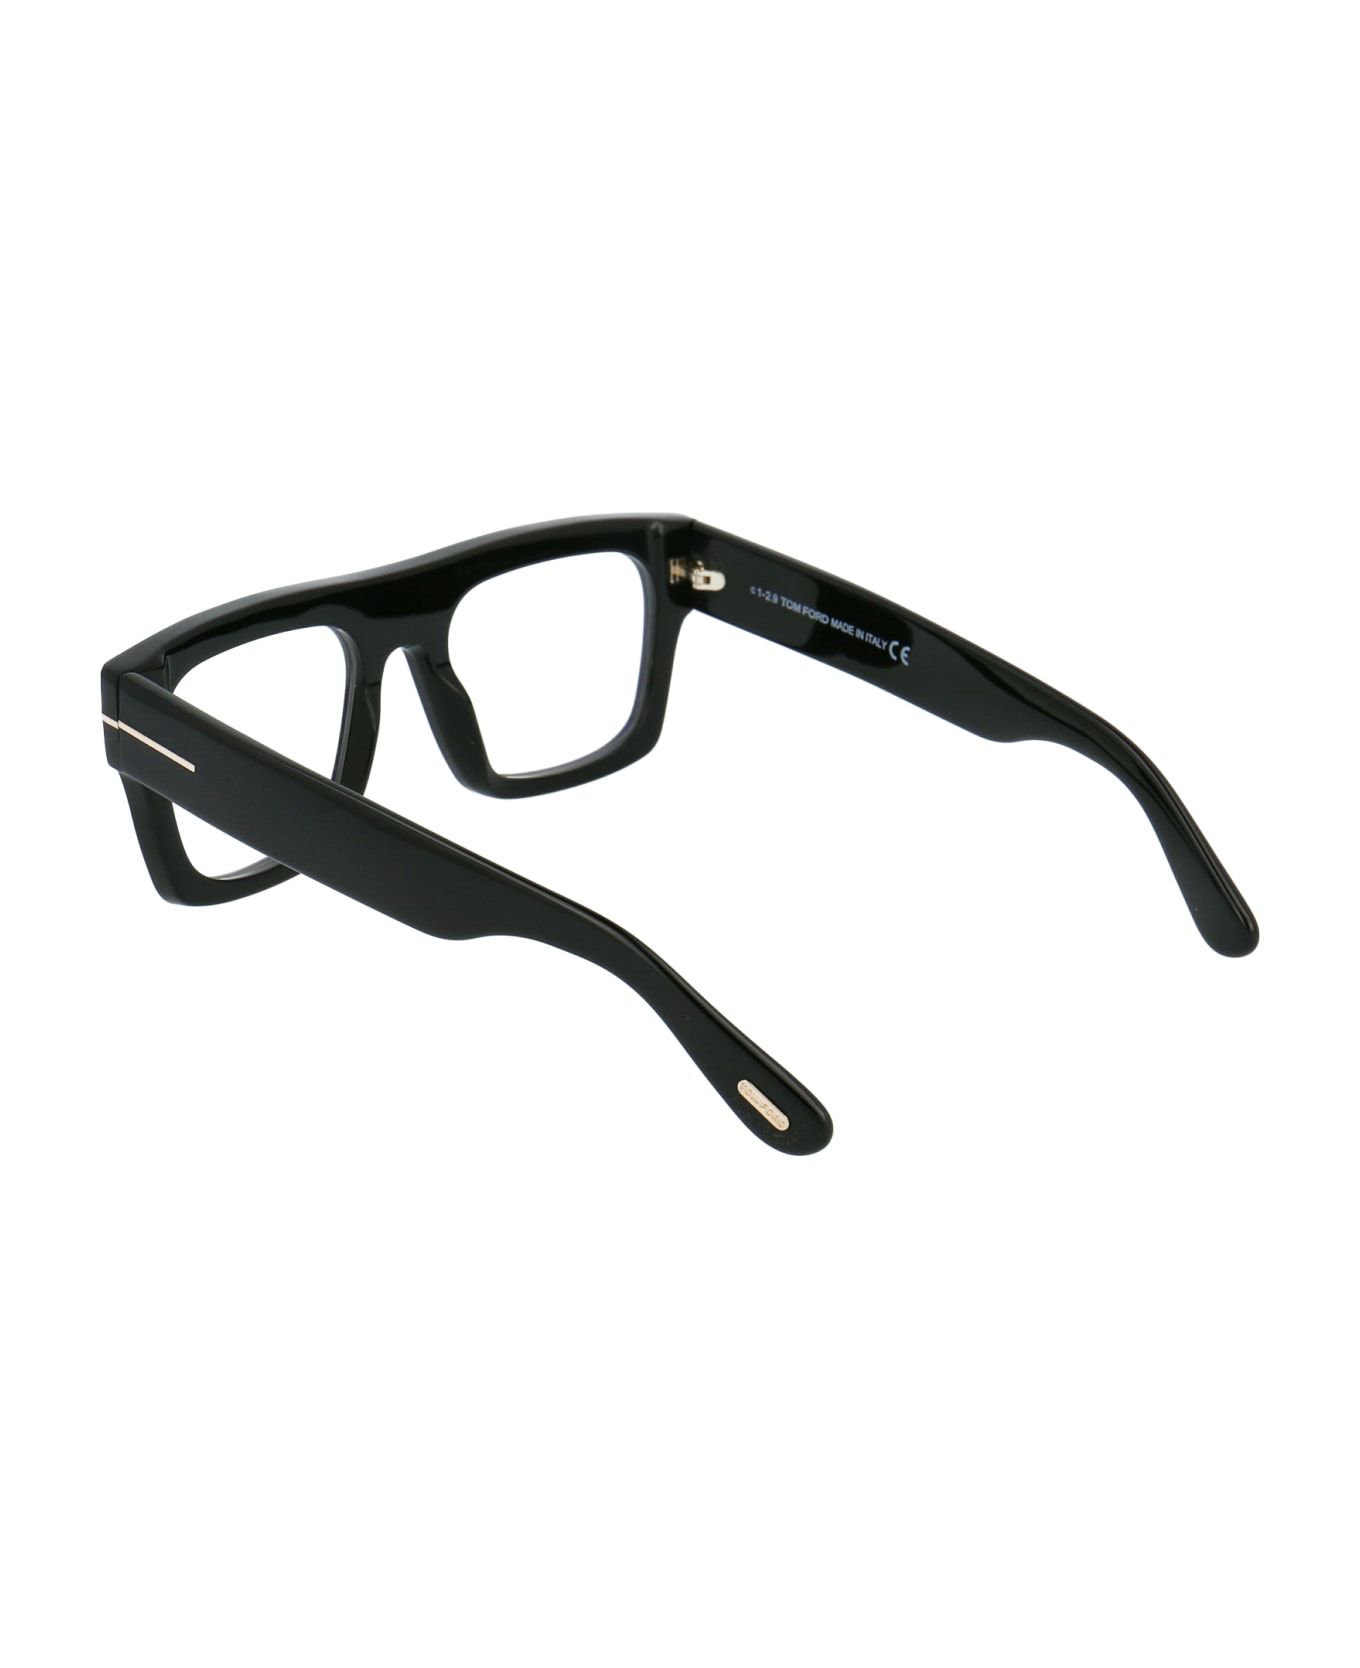 Tom Ford Eyewear Ft5634-b Glasses - 001 Nero Lucido